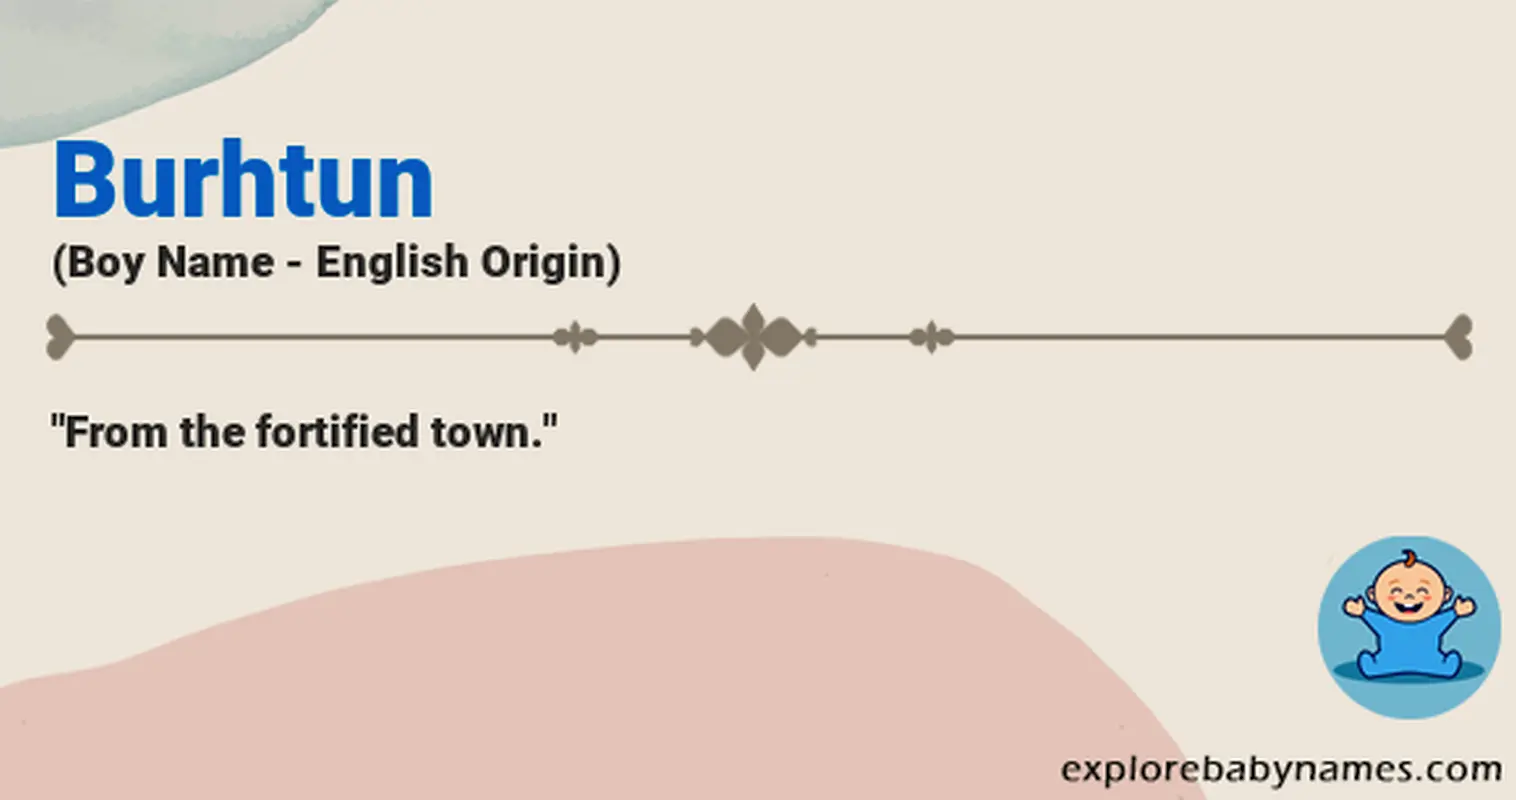 Meaning of Burhtun